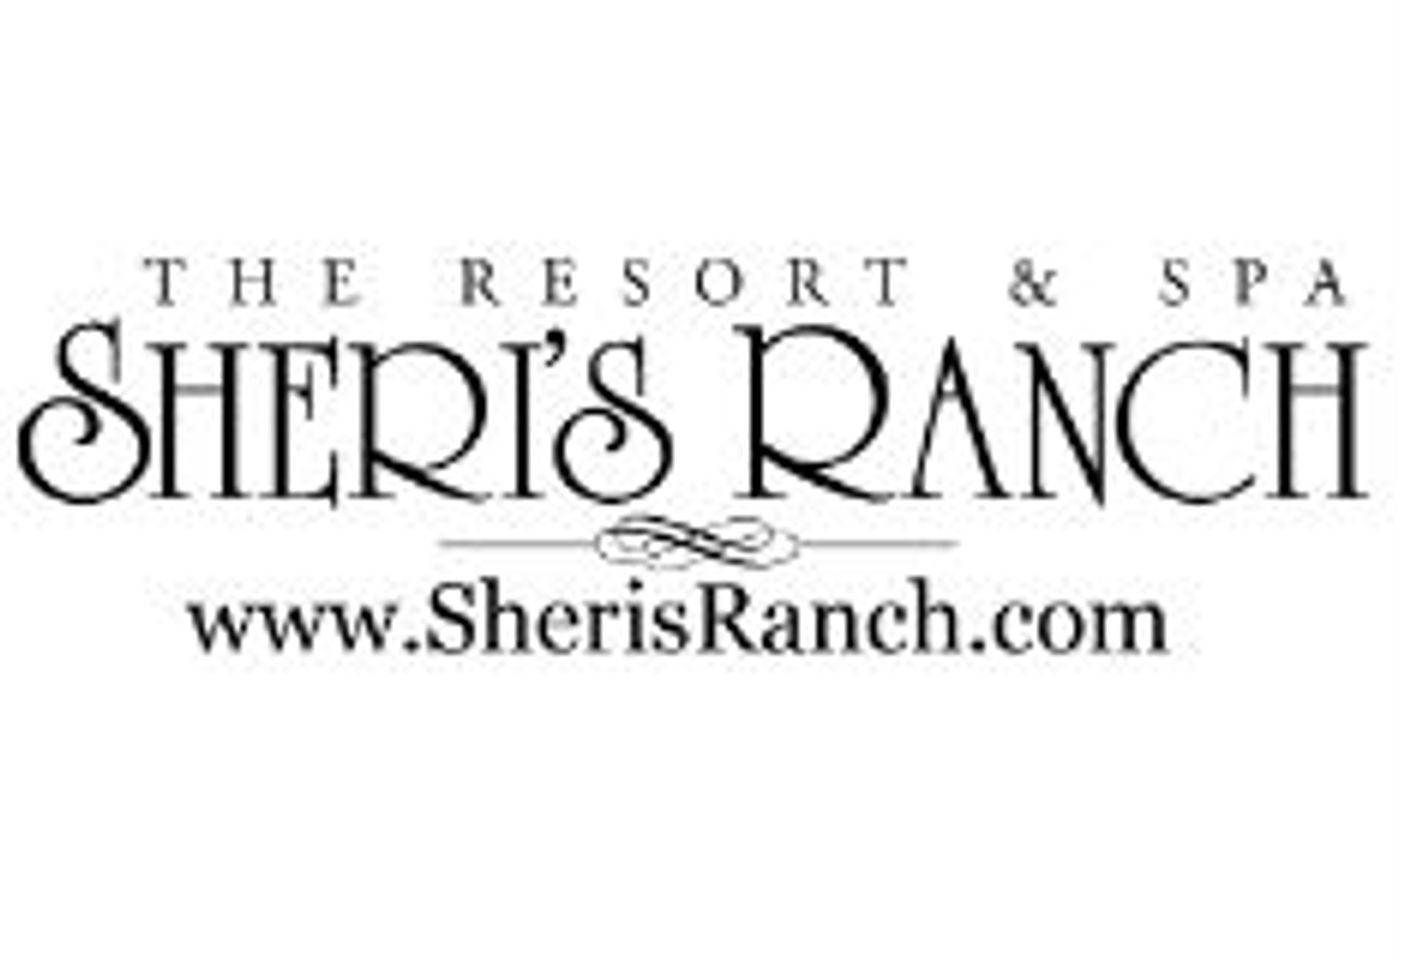 Sheri’s Ranch Now Offers Legal Nuru Massage Parlor